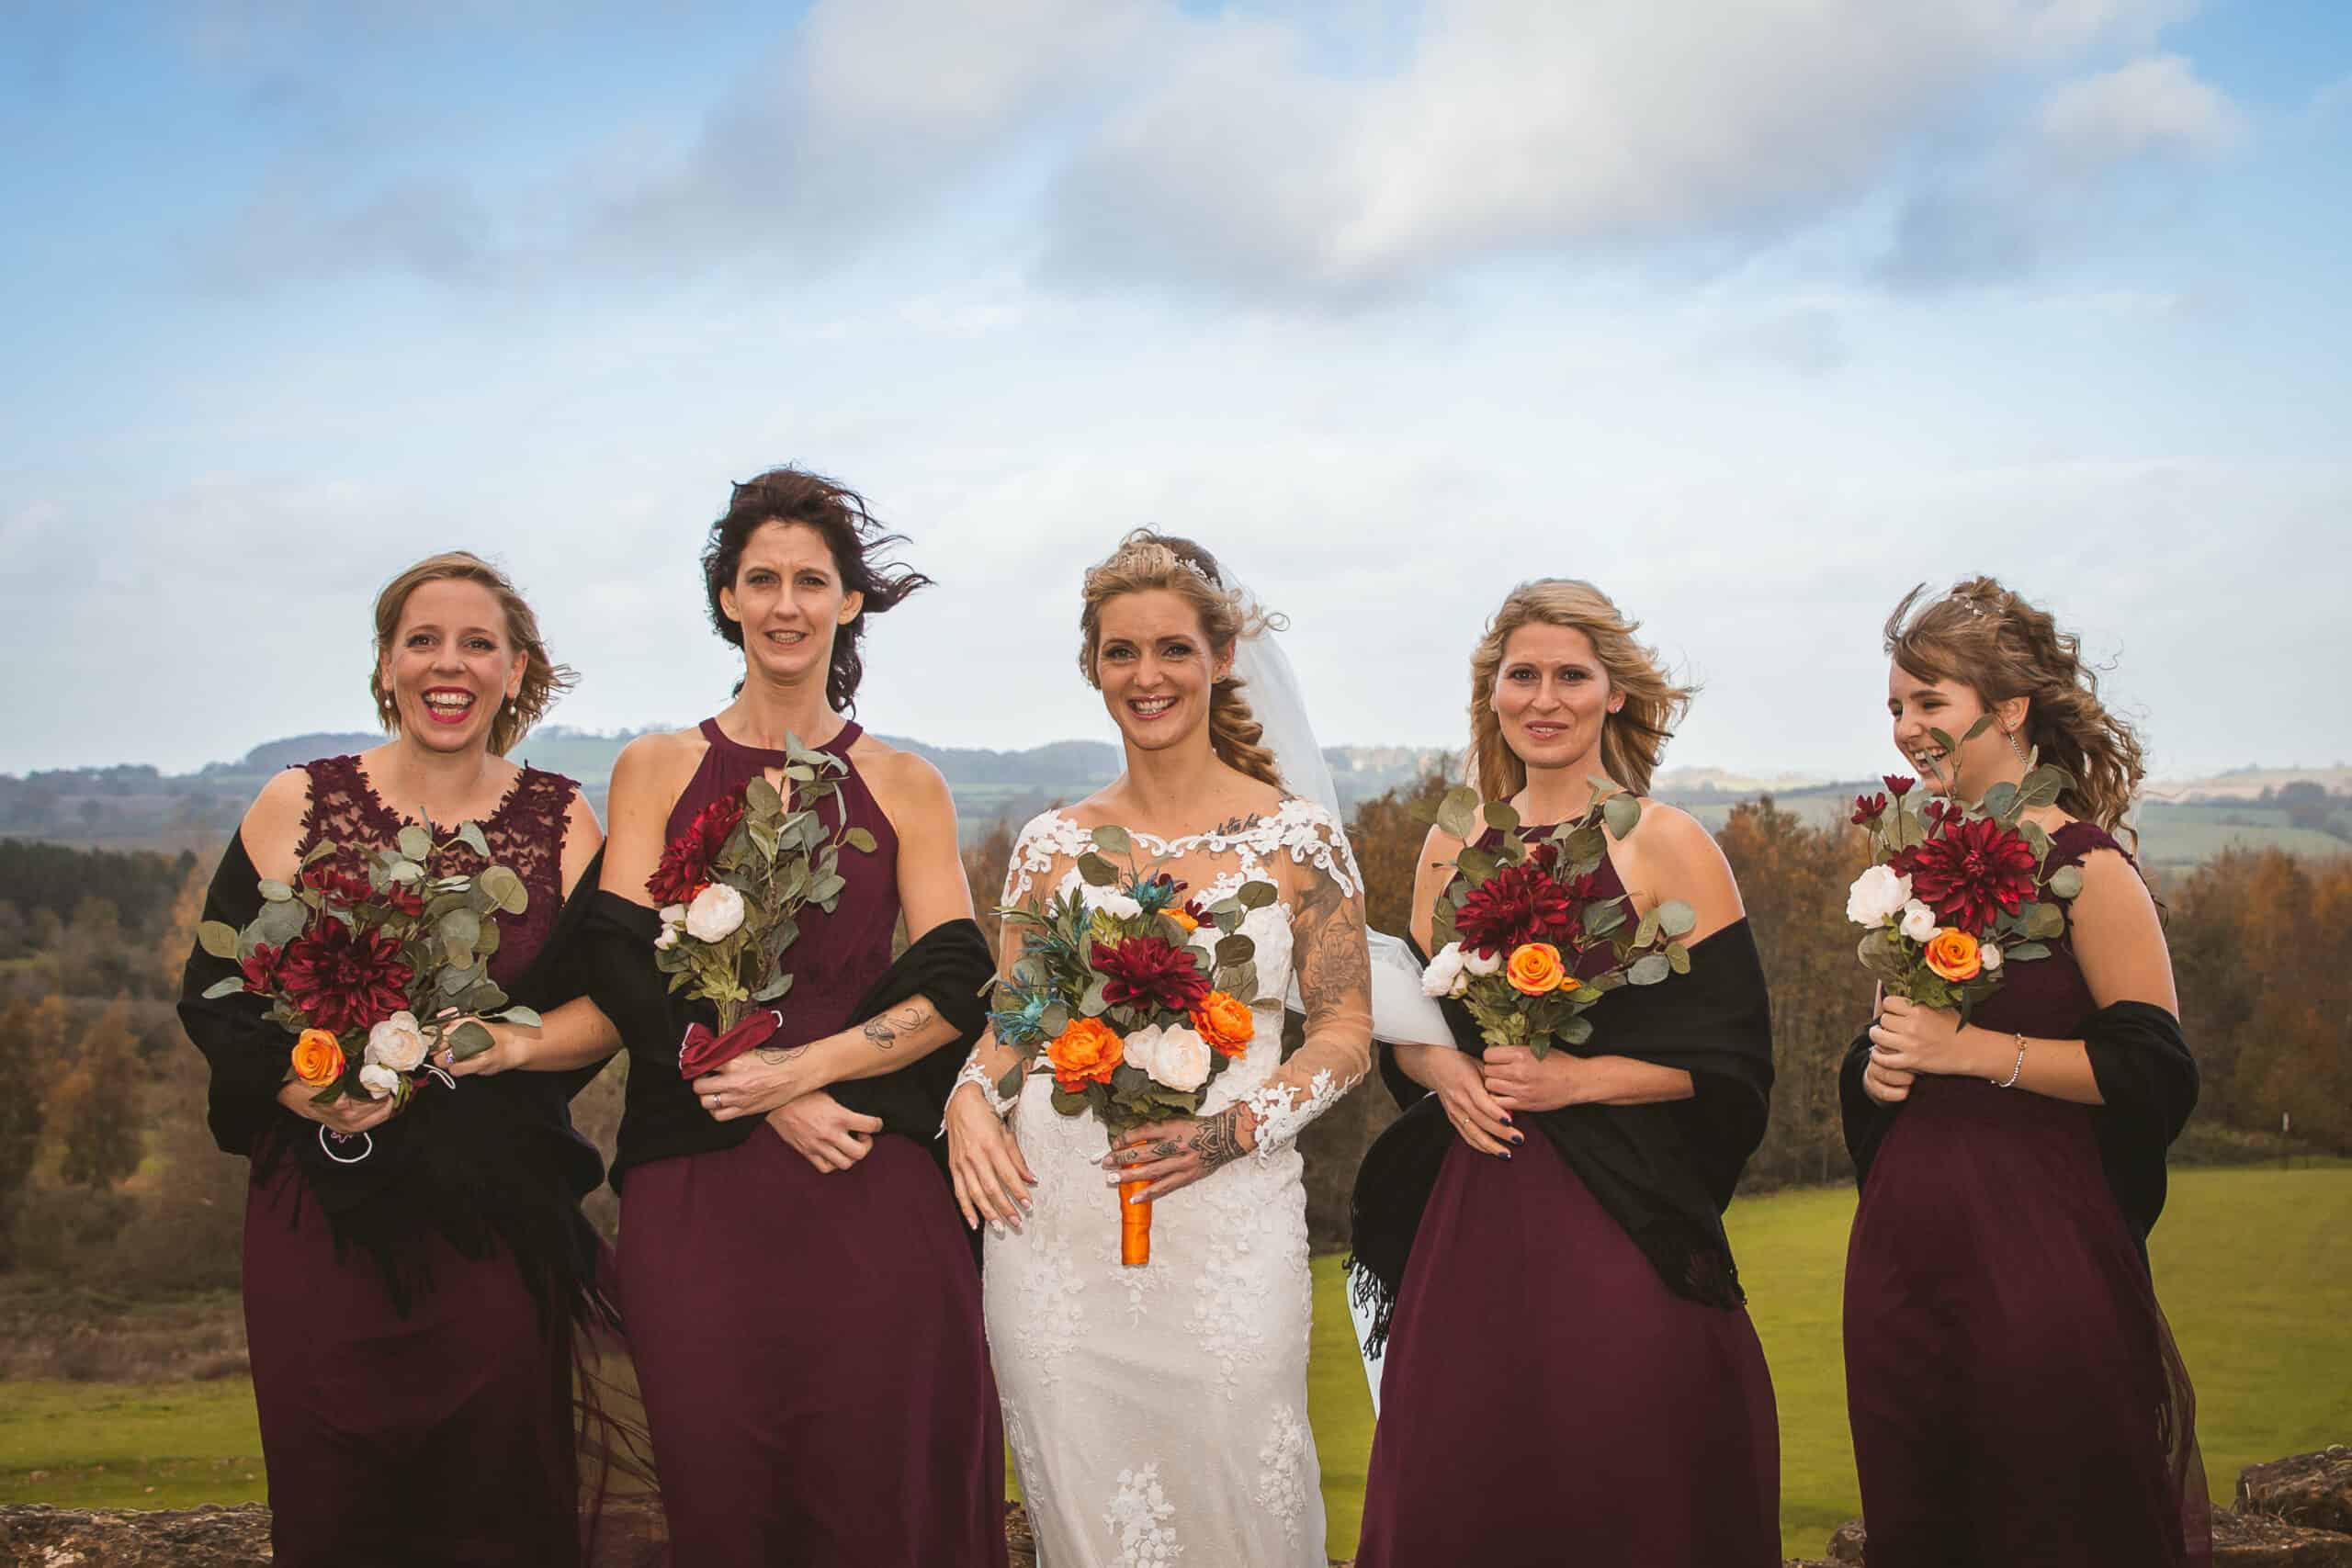 SilkFred.com - Call your bridesmaid squad, wedding season is